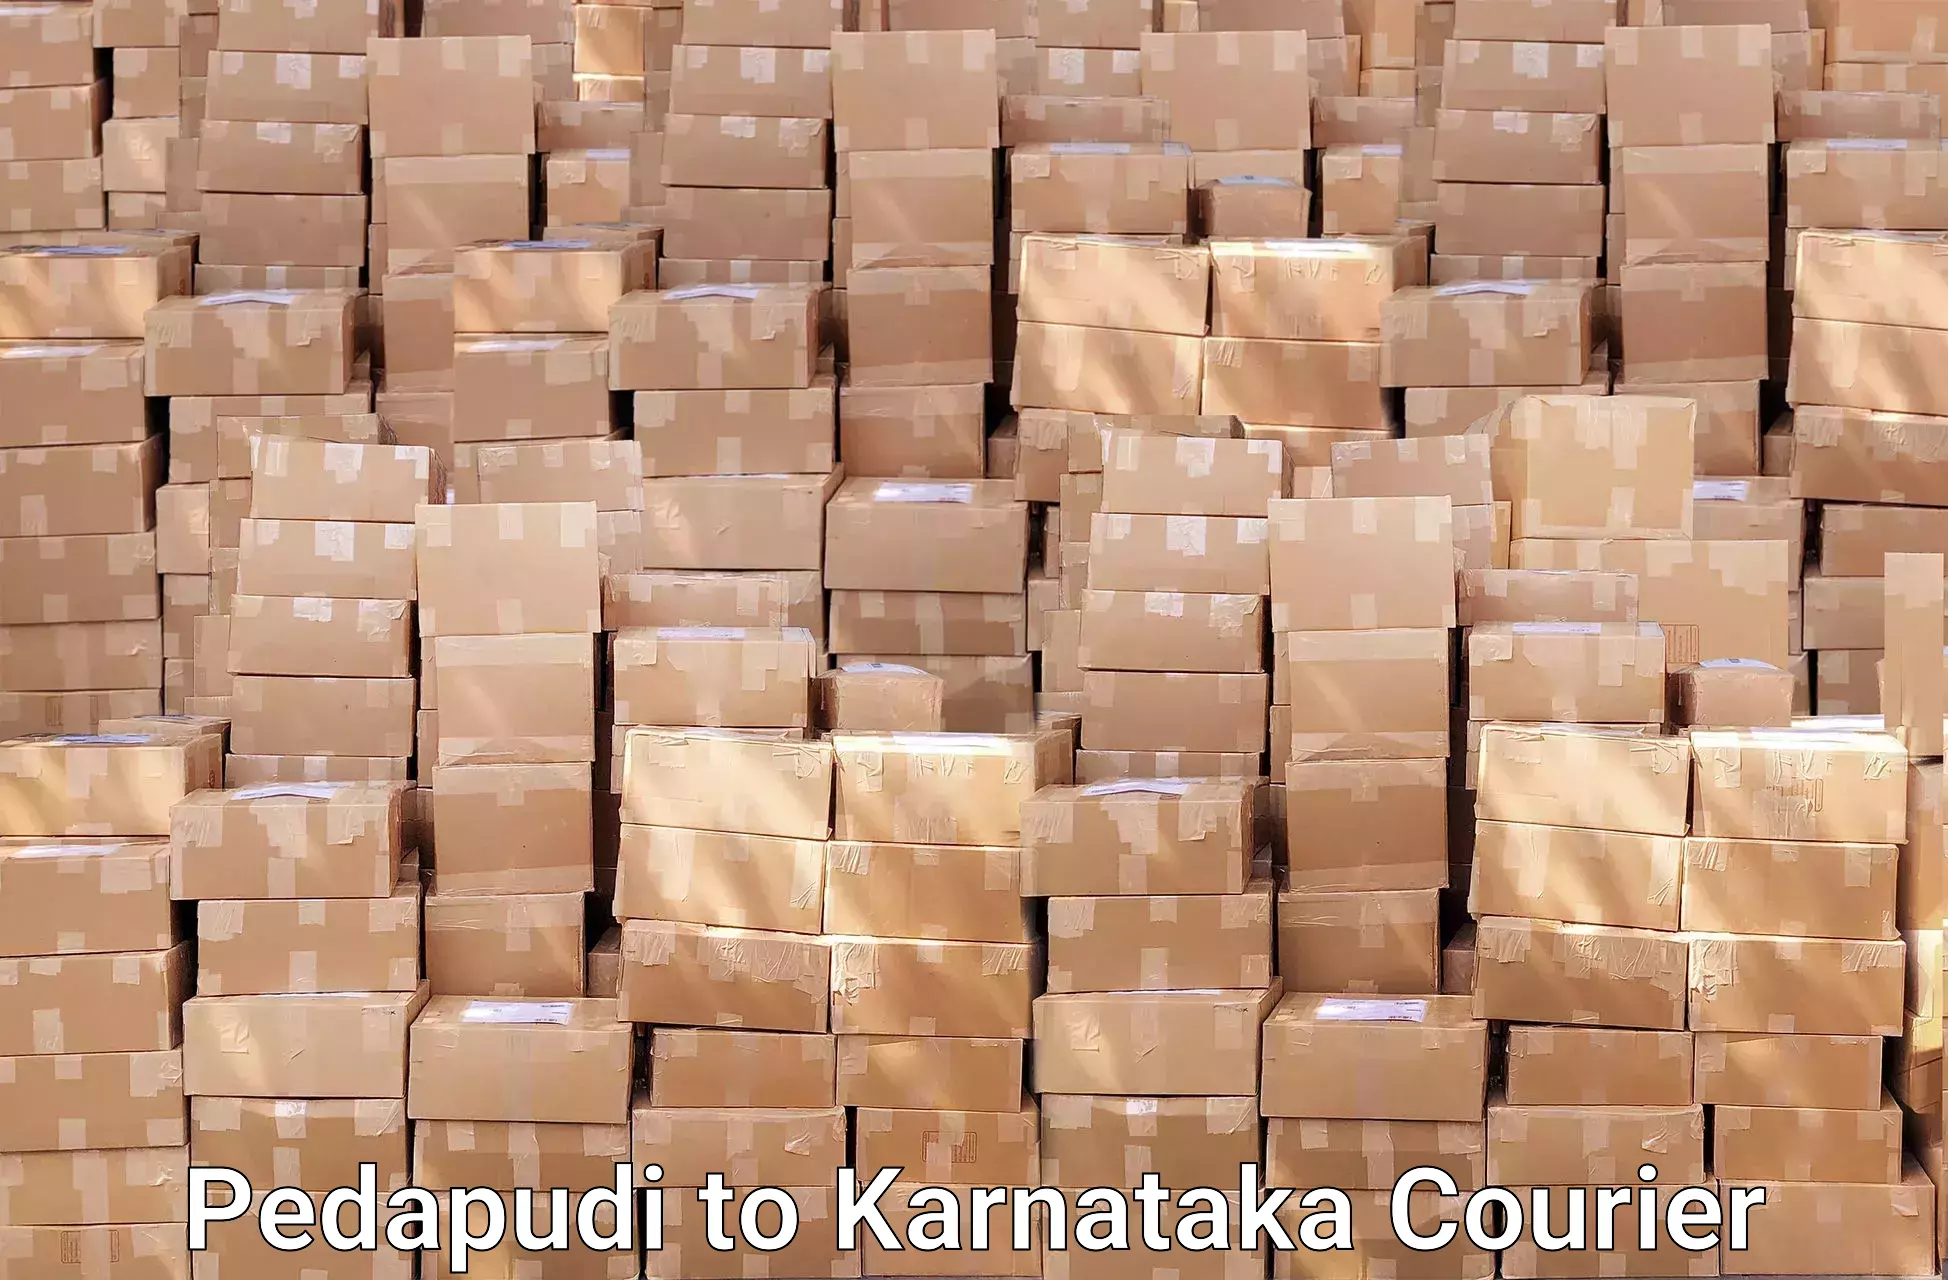 Home moving experts Pedapudi to Karnataka